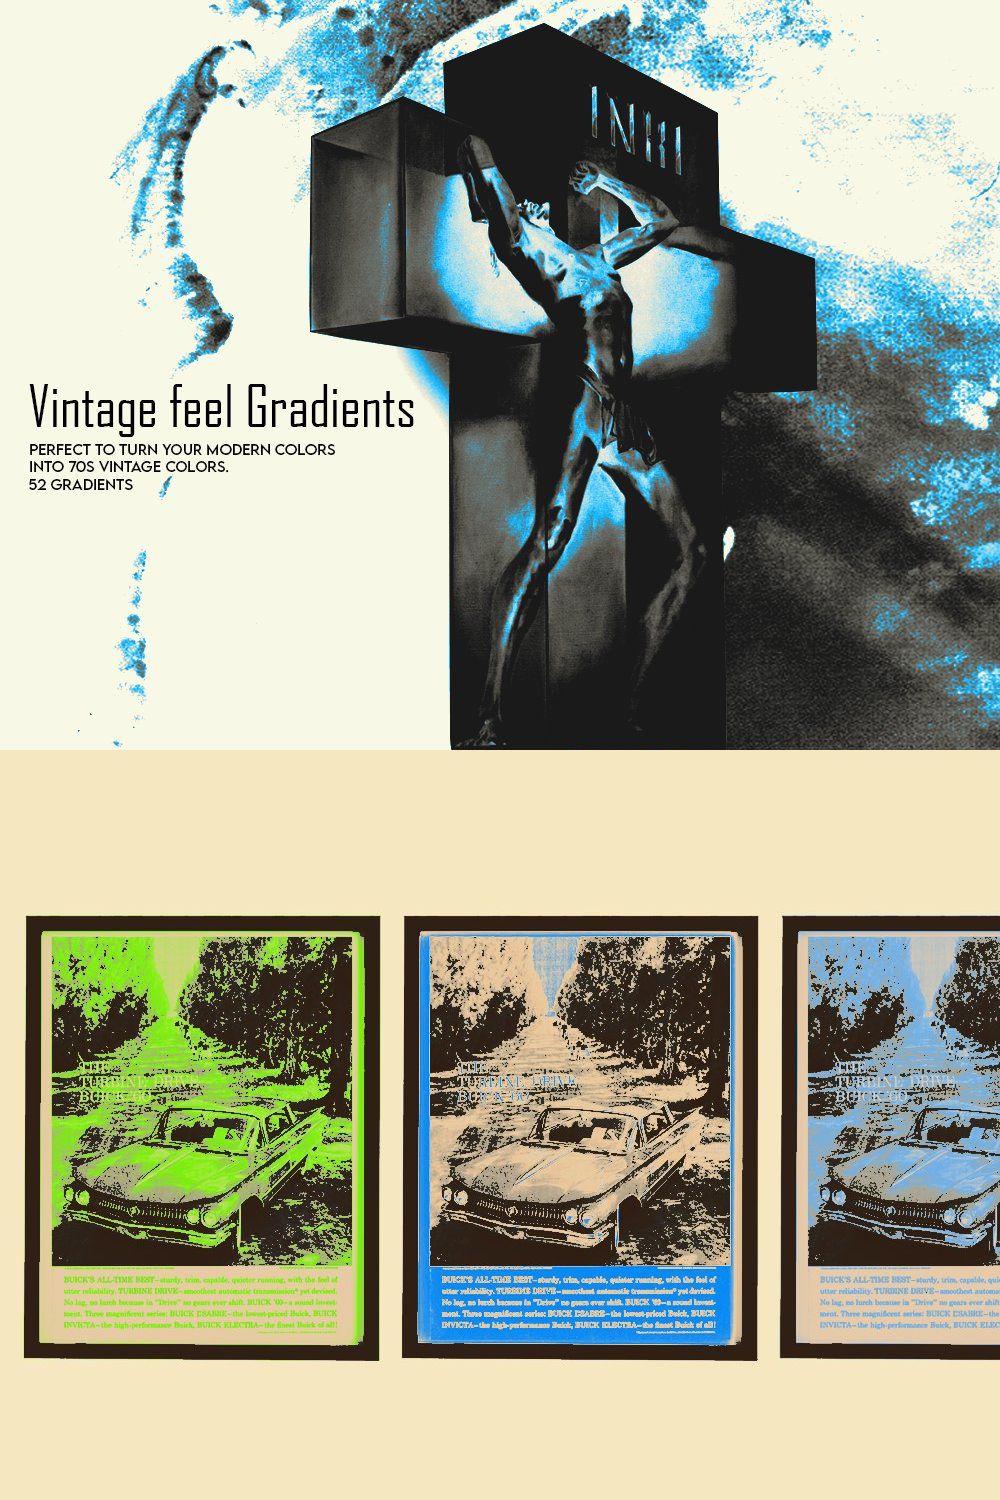 Vintage Feel Gradients pinterest preview image.